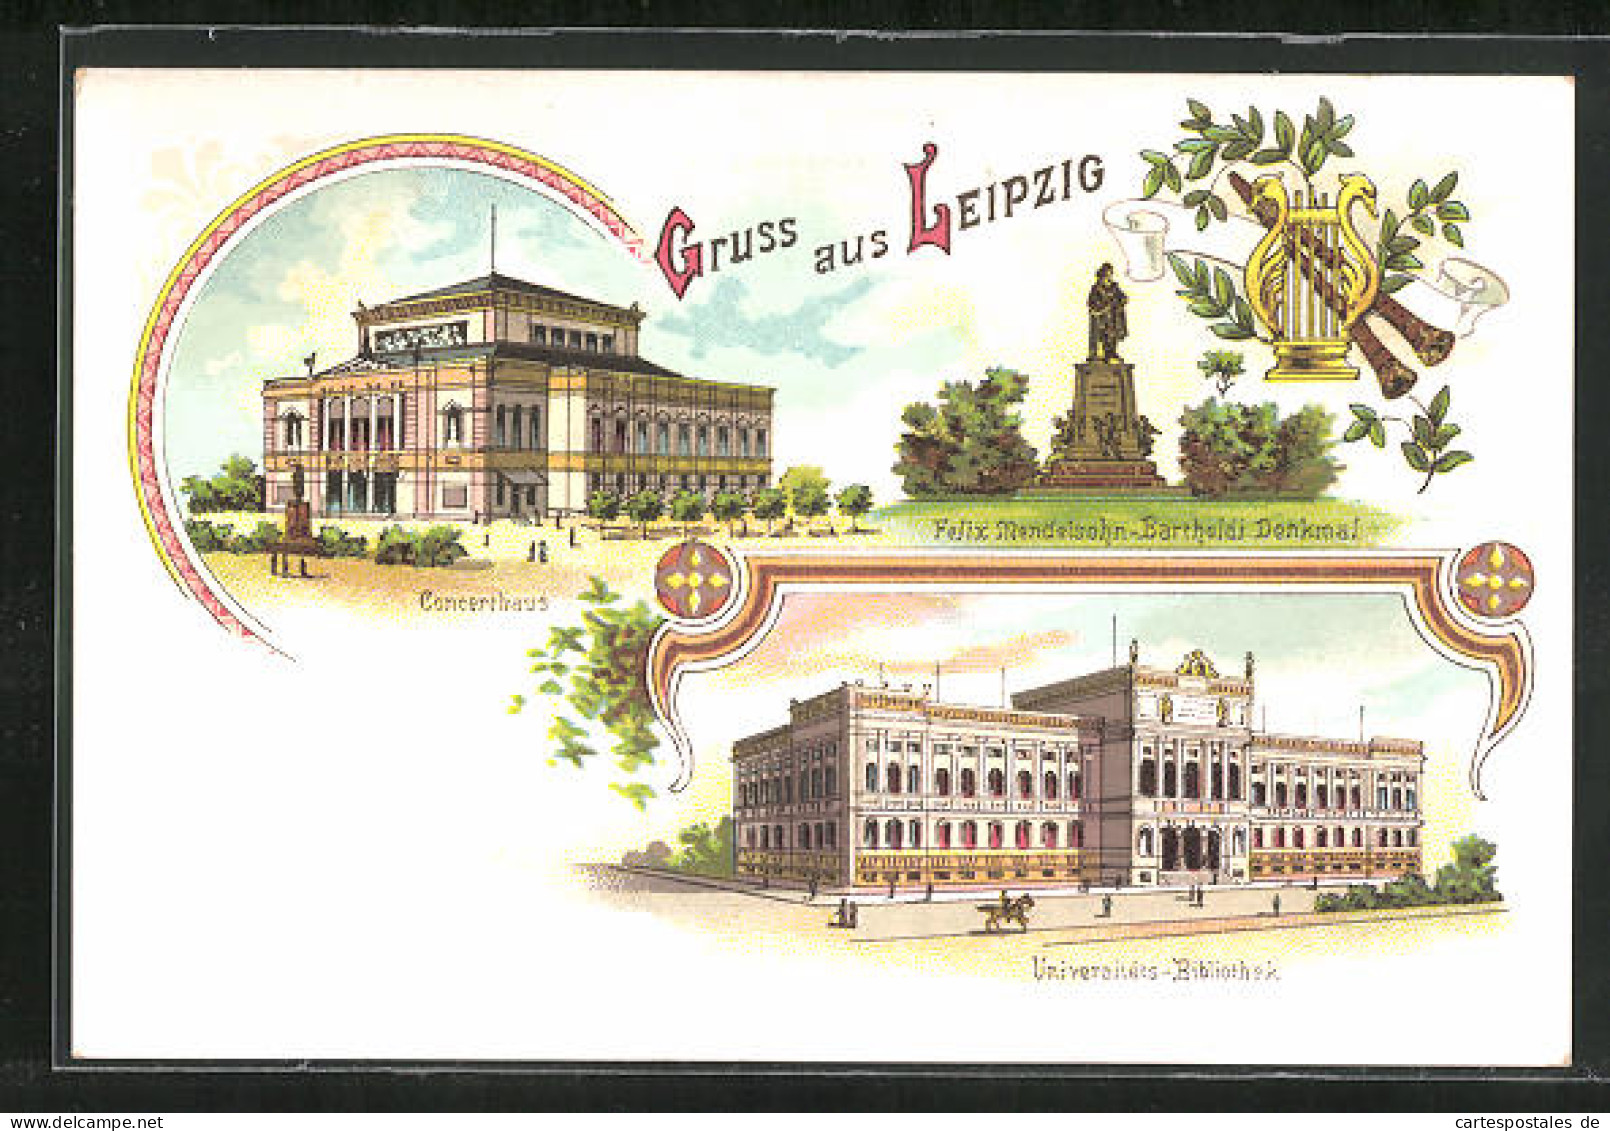 Lithographie Leipzig, Concerthaus, Universitäts-Bibliothek, Felix Mendesohn-Bartholdi-Denkmal  - Leipzig